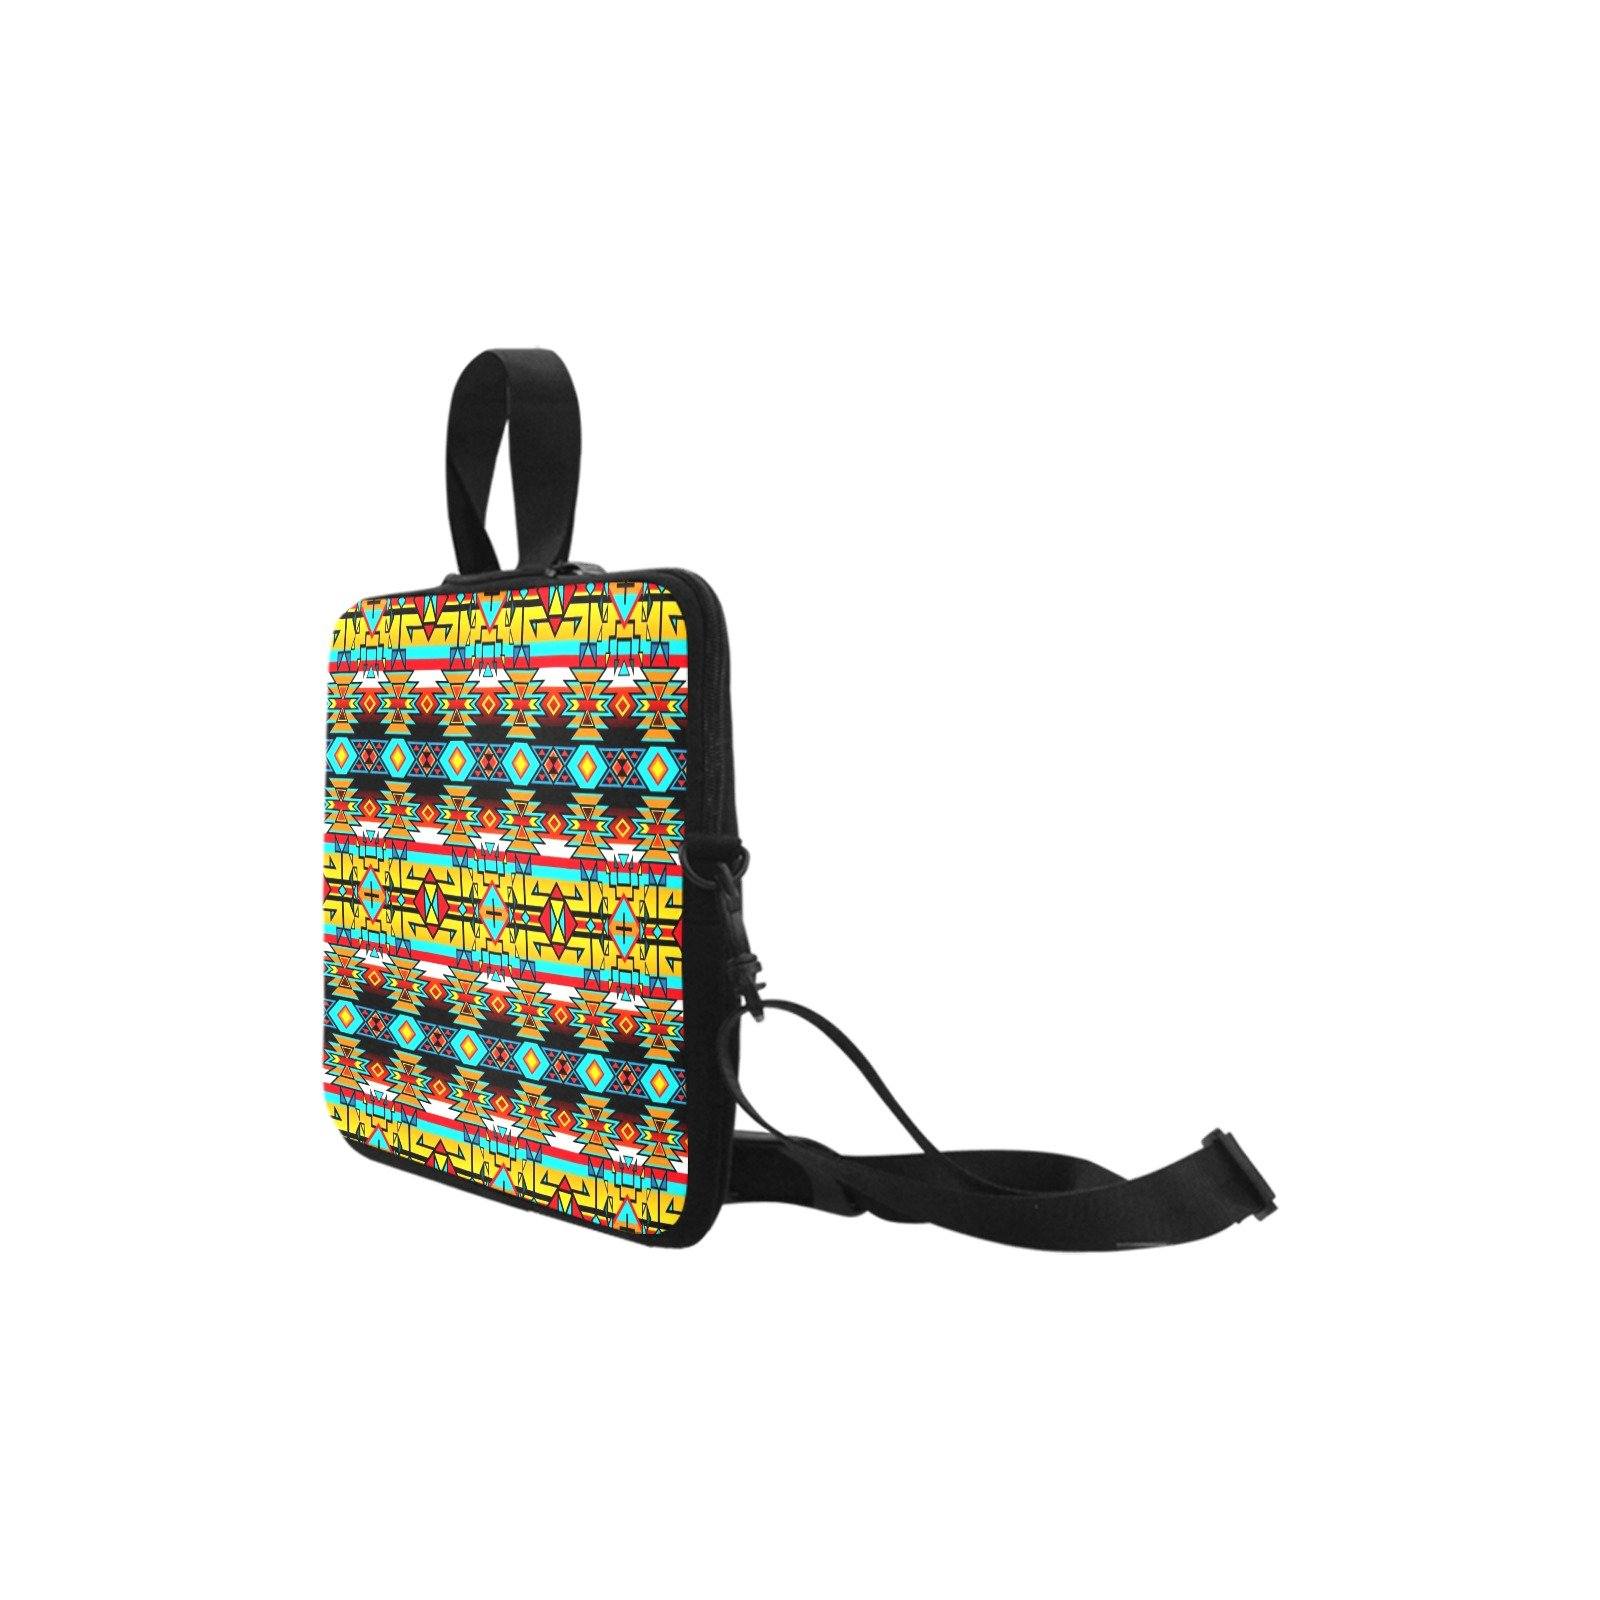 Force of Nature Twister Laptop Handbags 14" bag e-joyer 